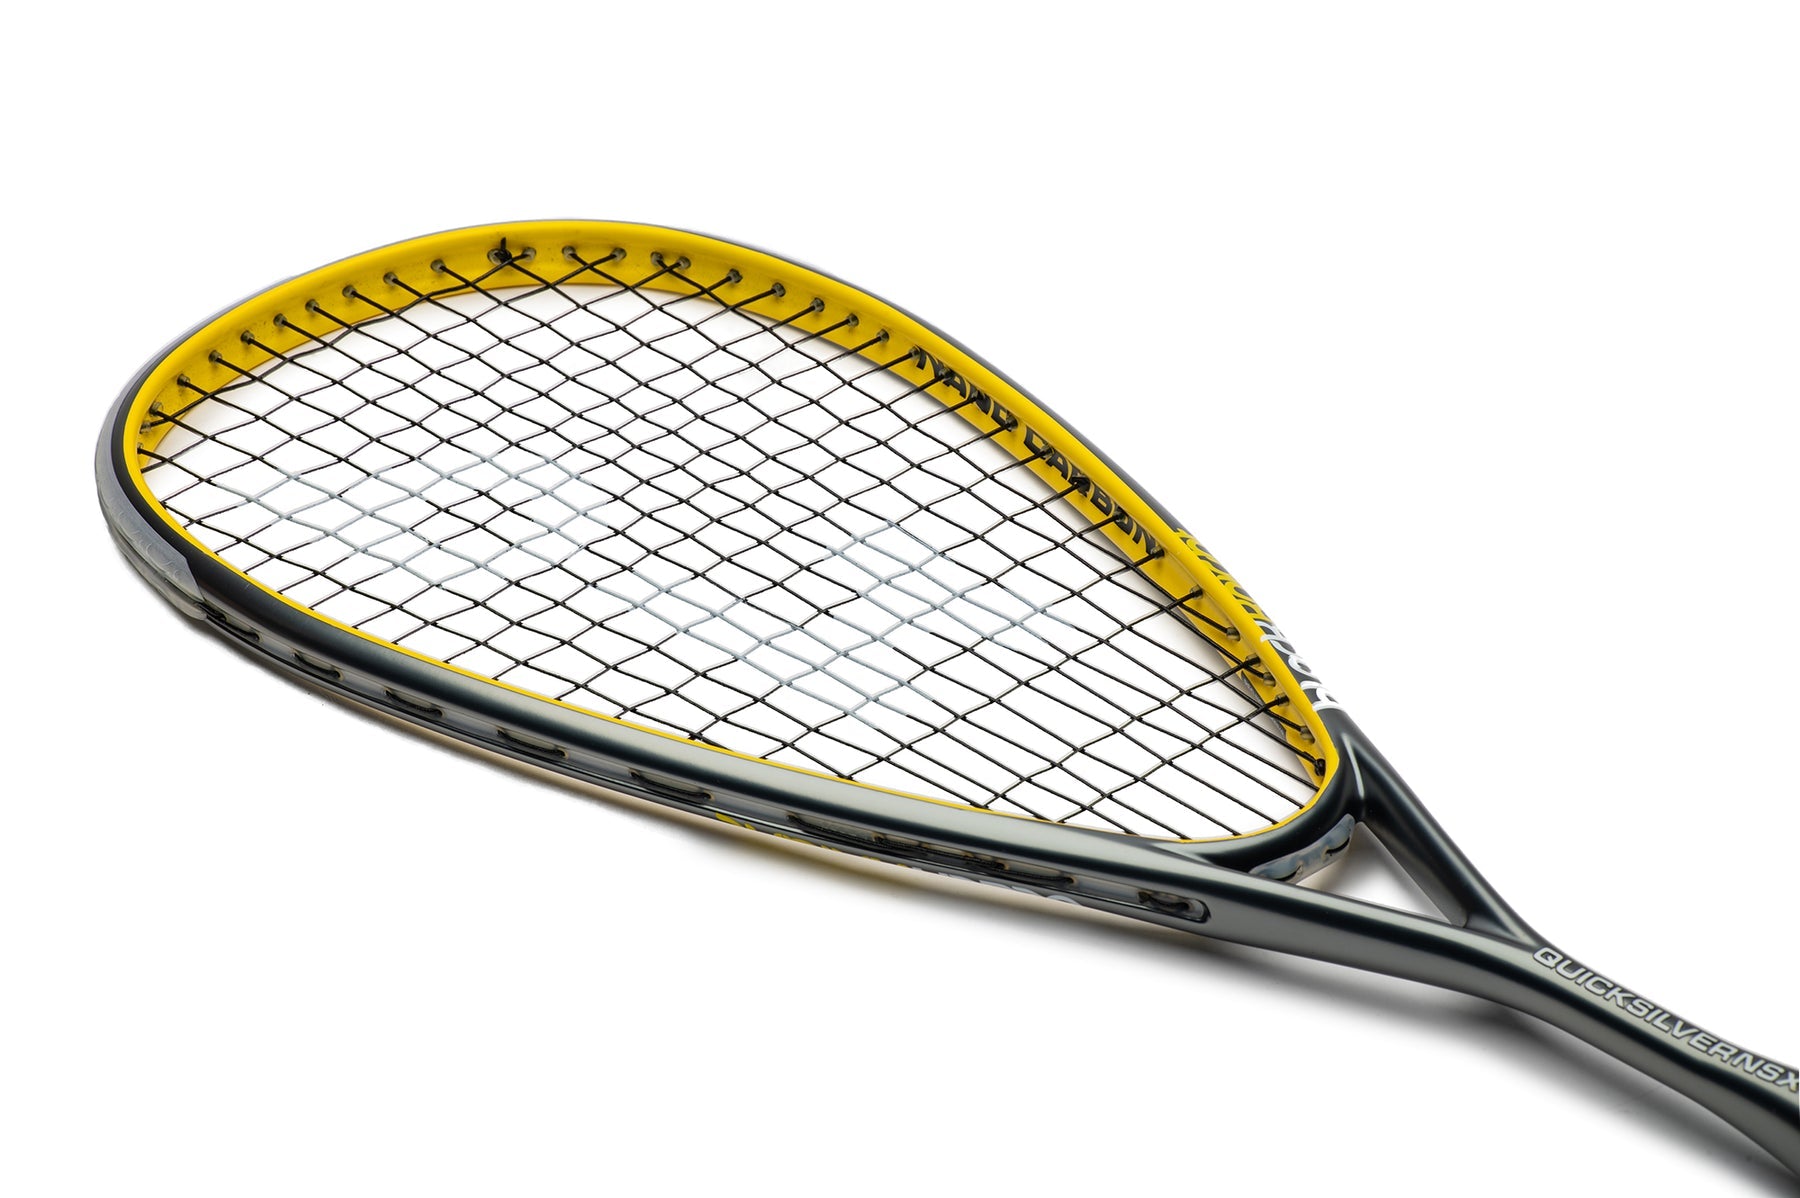 Black Knight Quicksilver nXS Squash Racquet